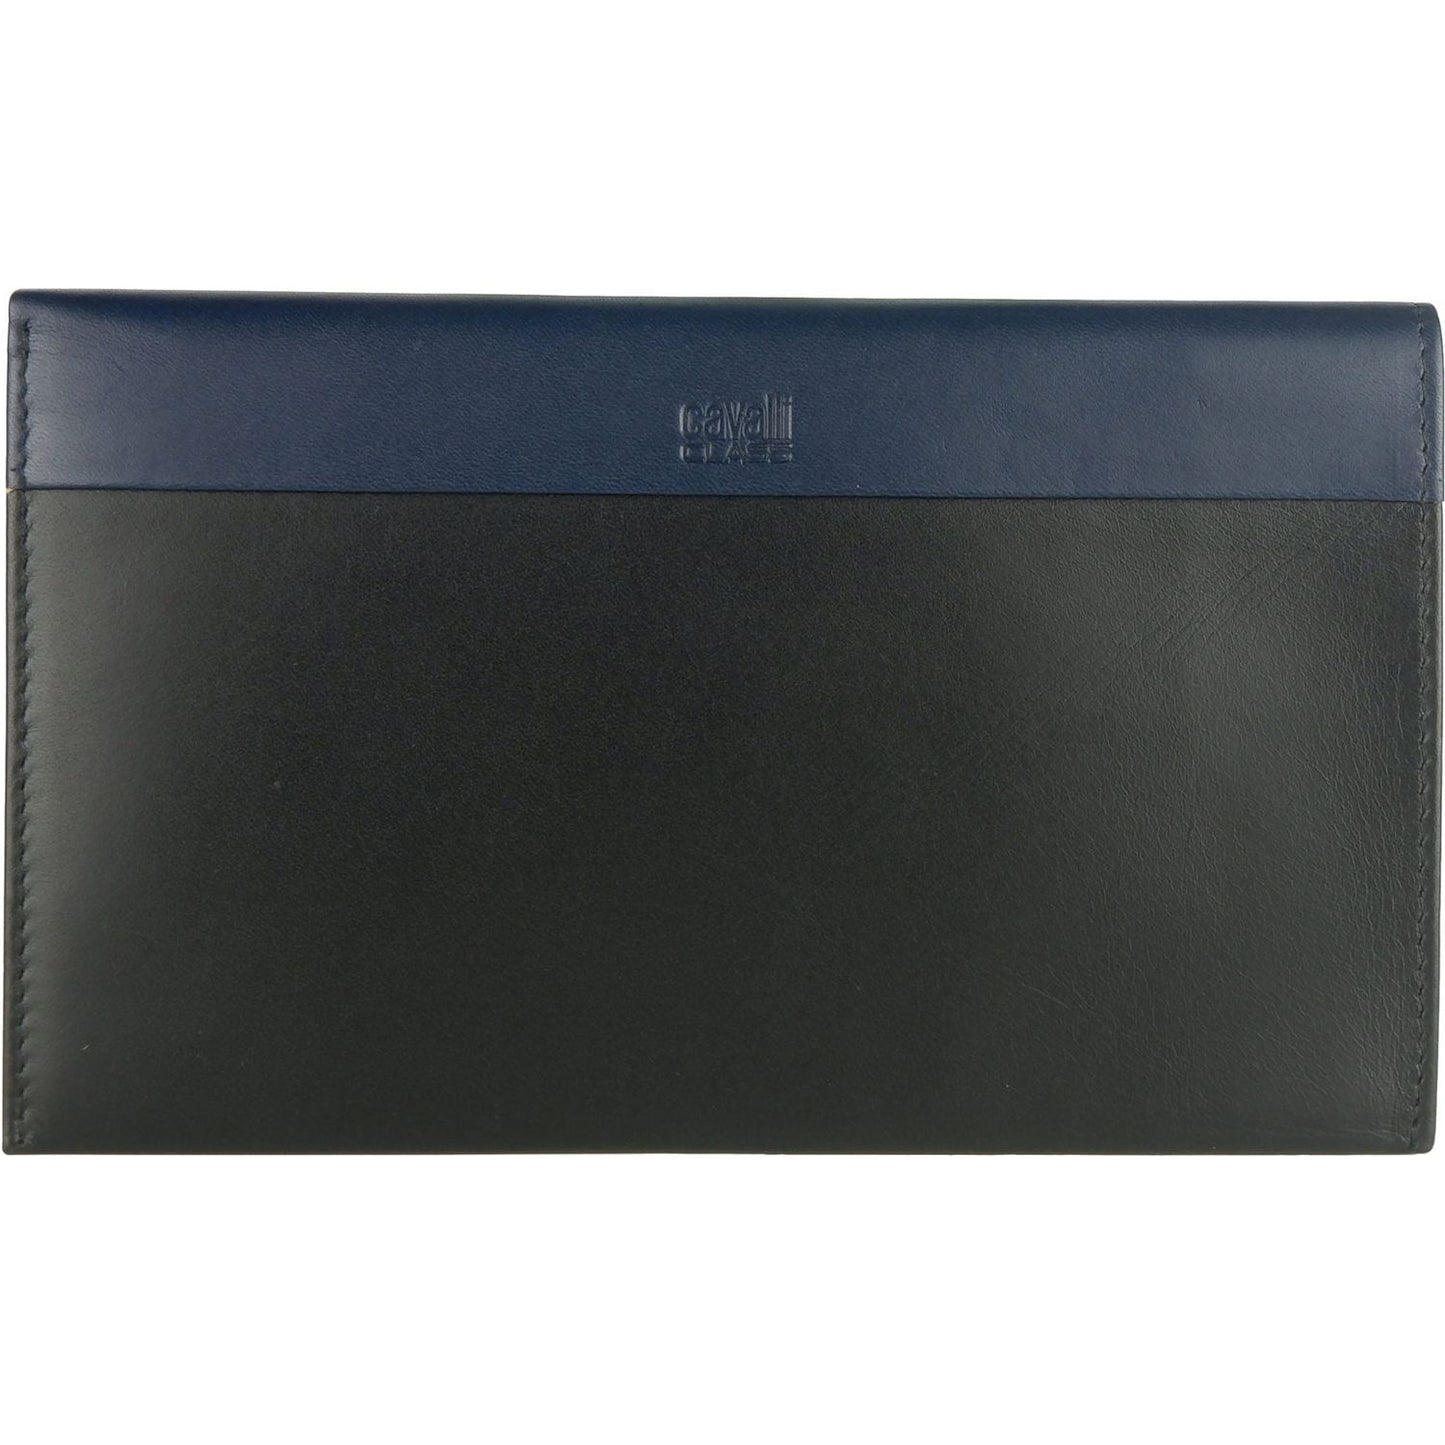 Cavalli Class Elegant Dual-Tone Leather Wallet MAN WALLETS cci-b-cavalli-class-wallet product-6875-687816556-3-scaled-516b731c-8e9.jpg